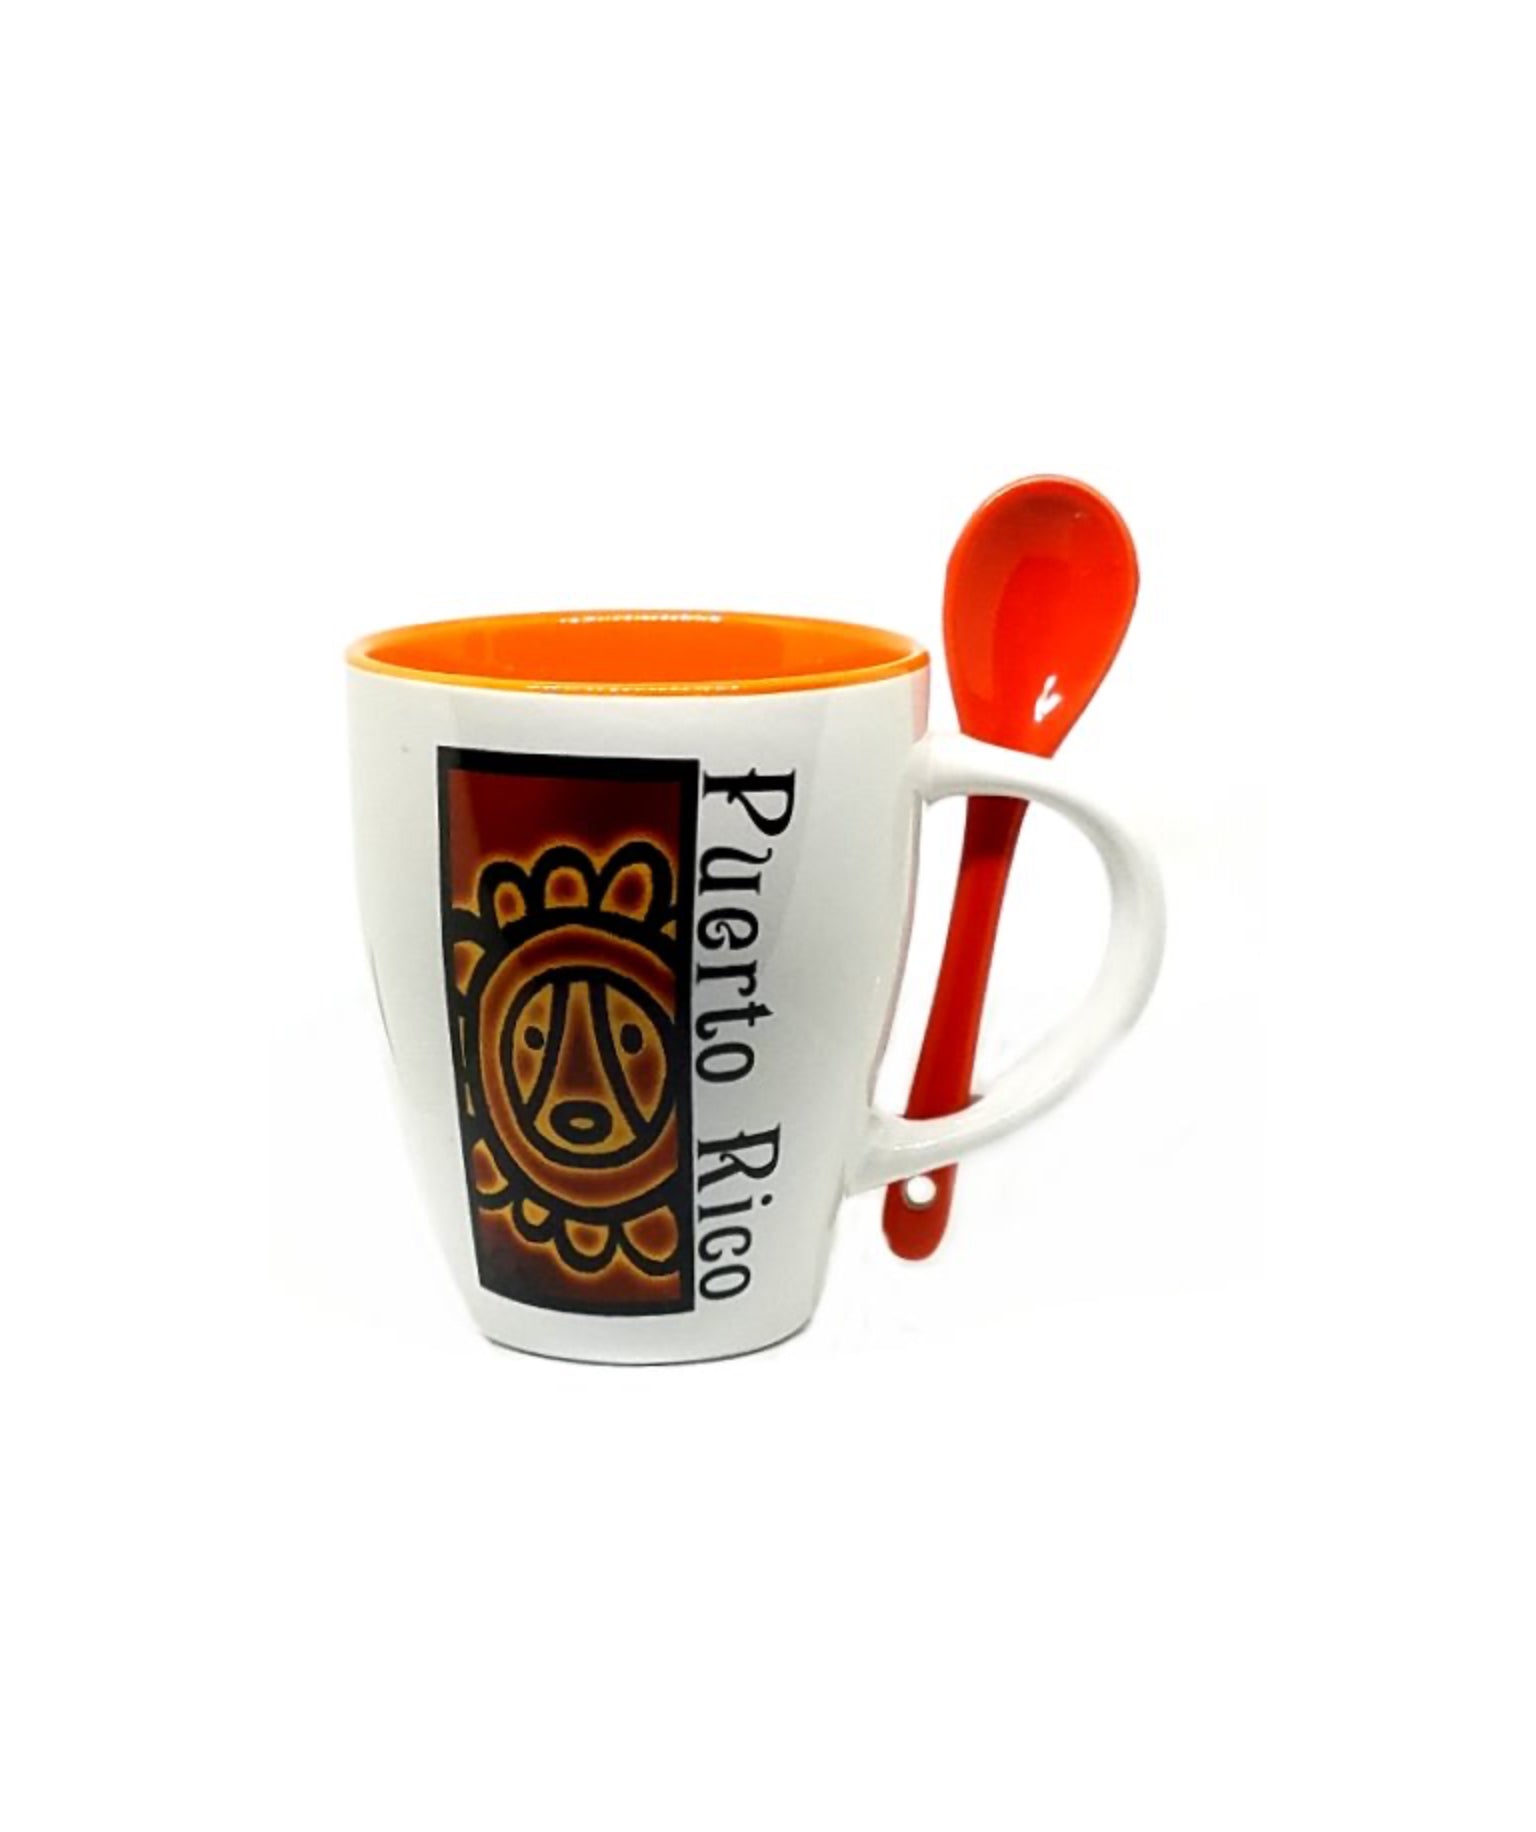 uerto Rico Coffee Cup with Spoon Handel Ceramics Mug